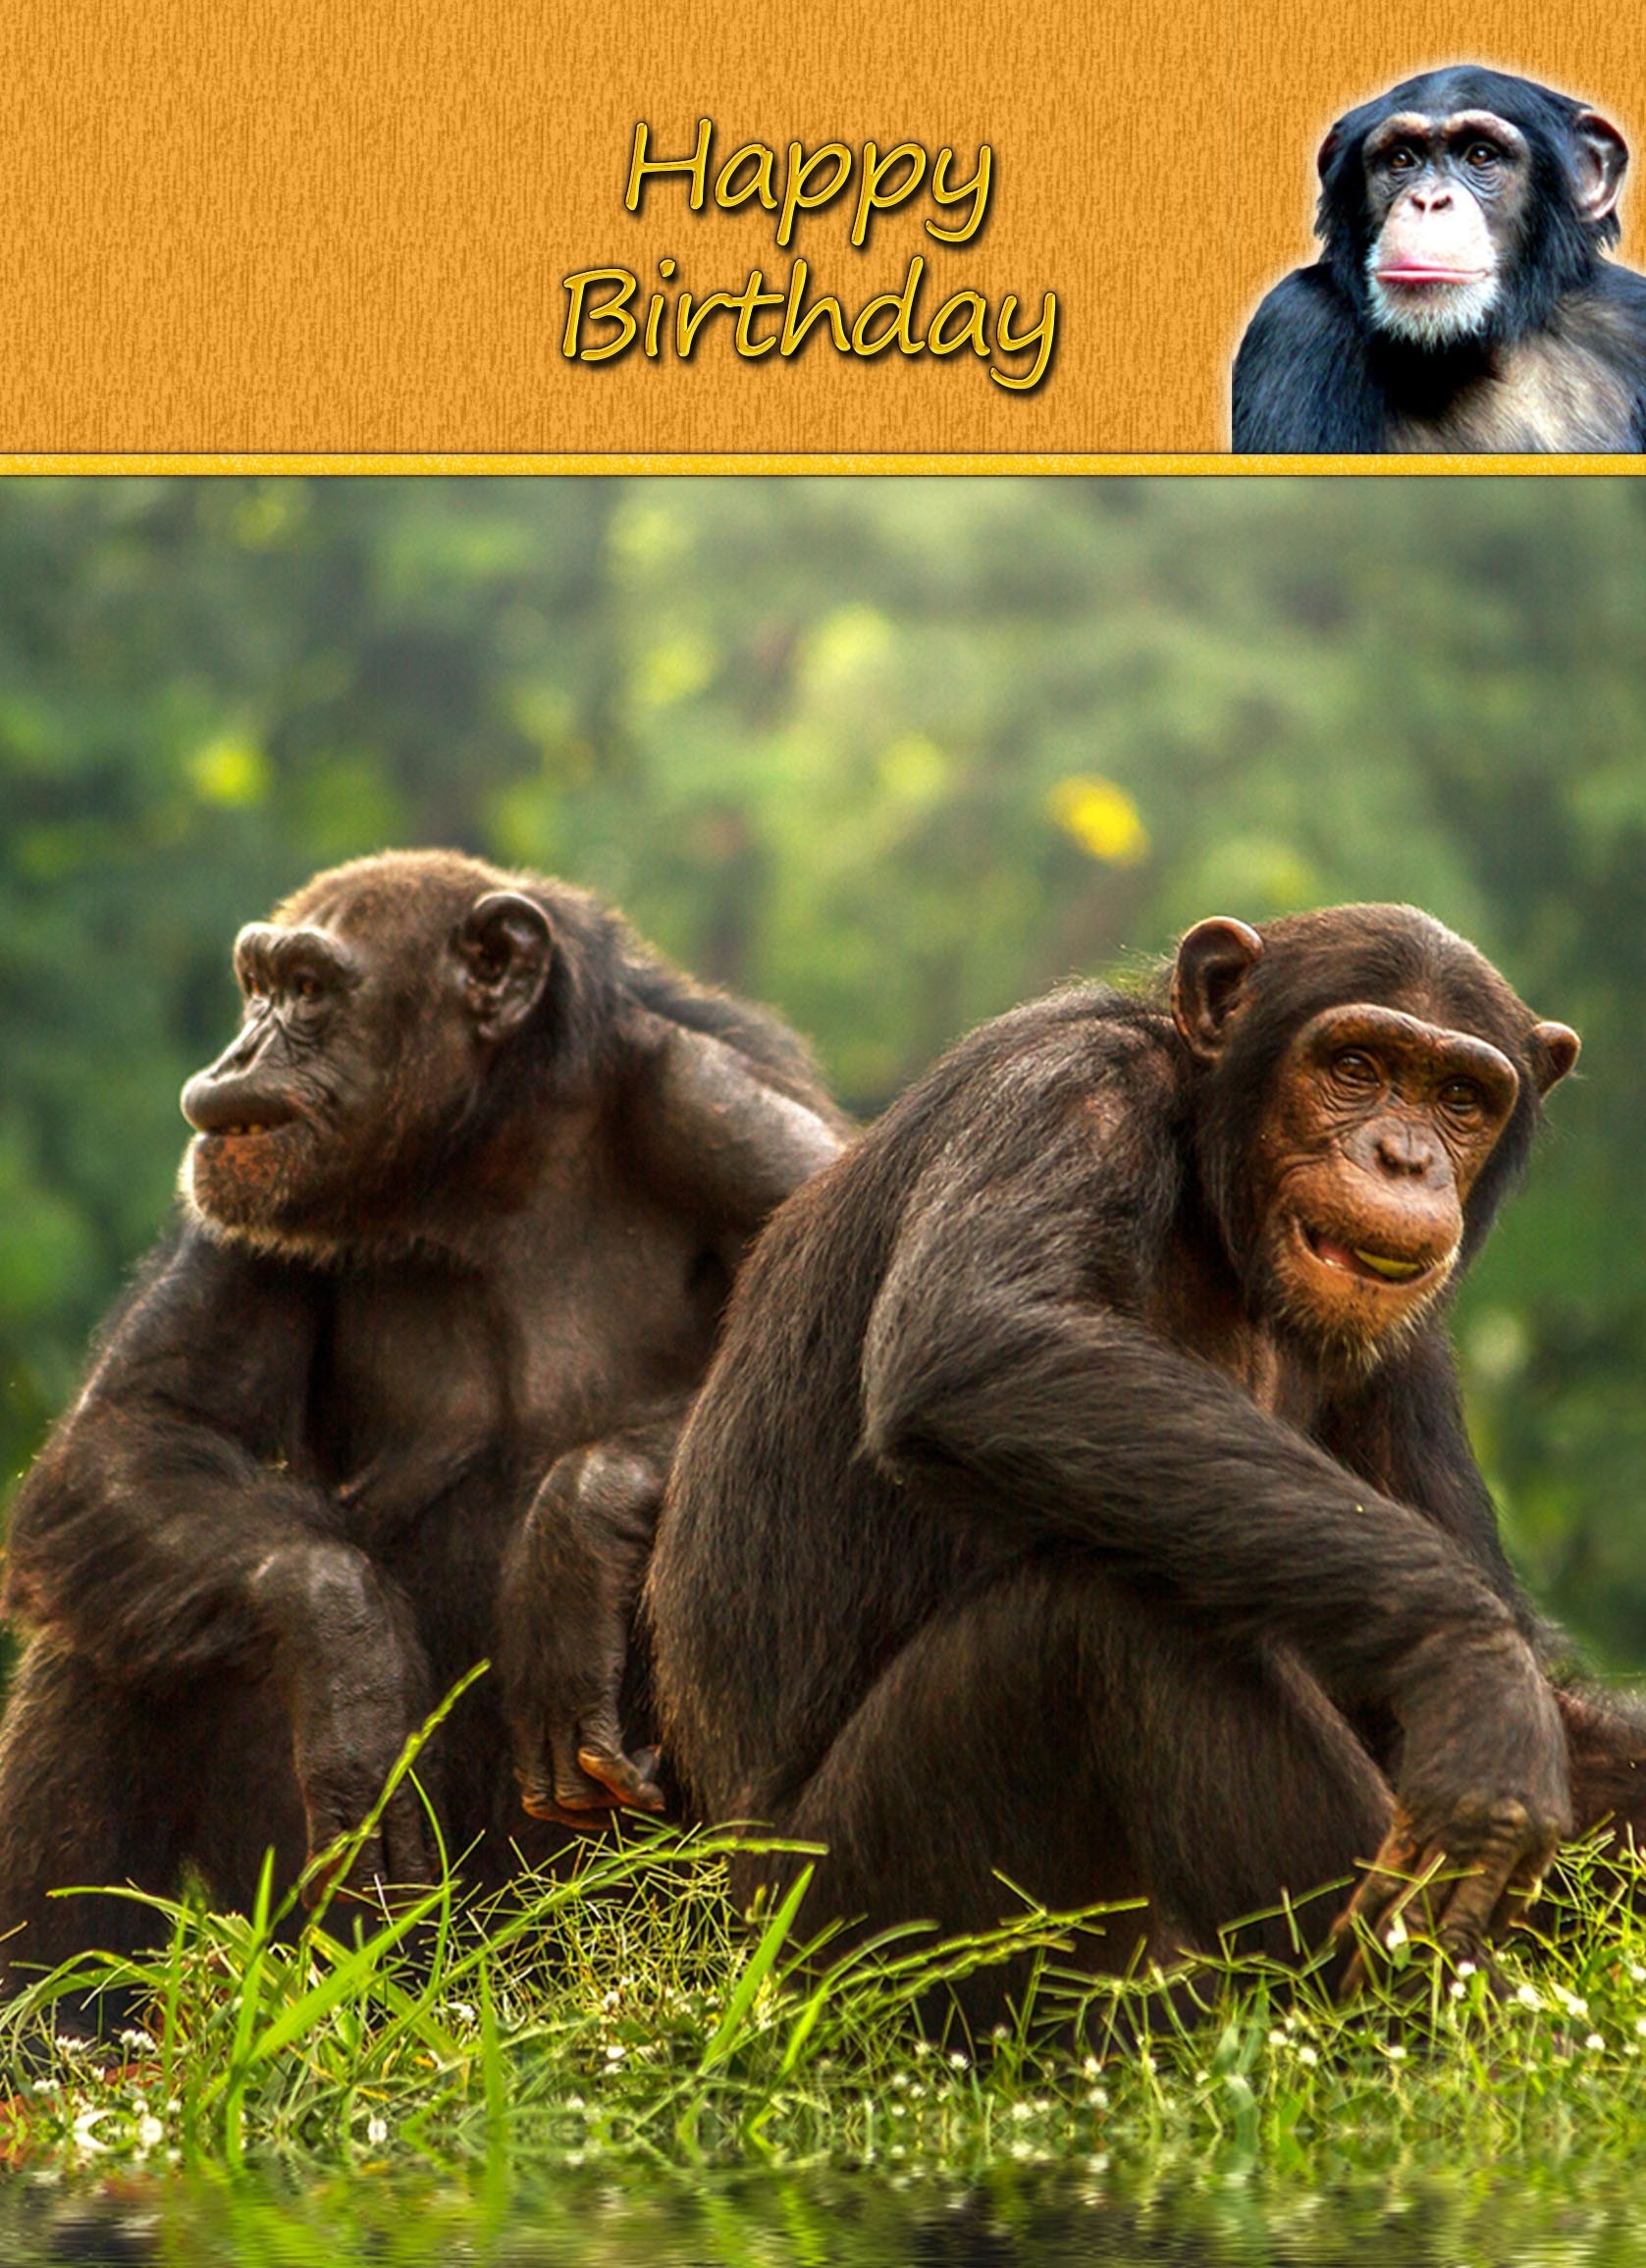 Chimpanzee Birthday Card